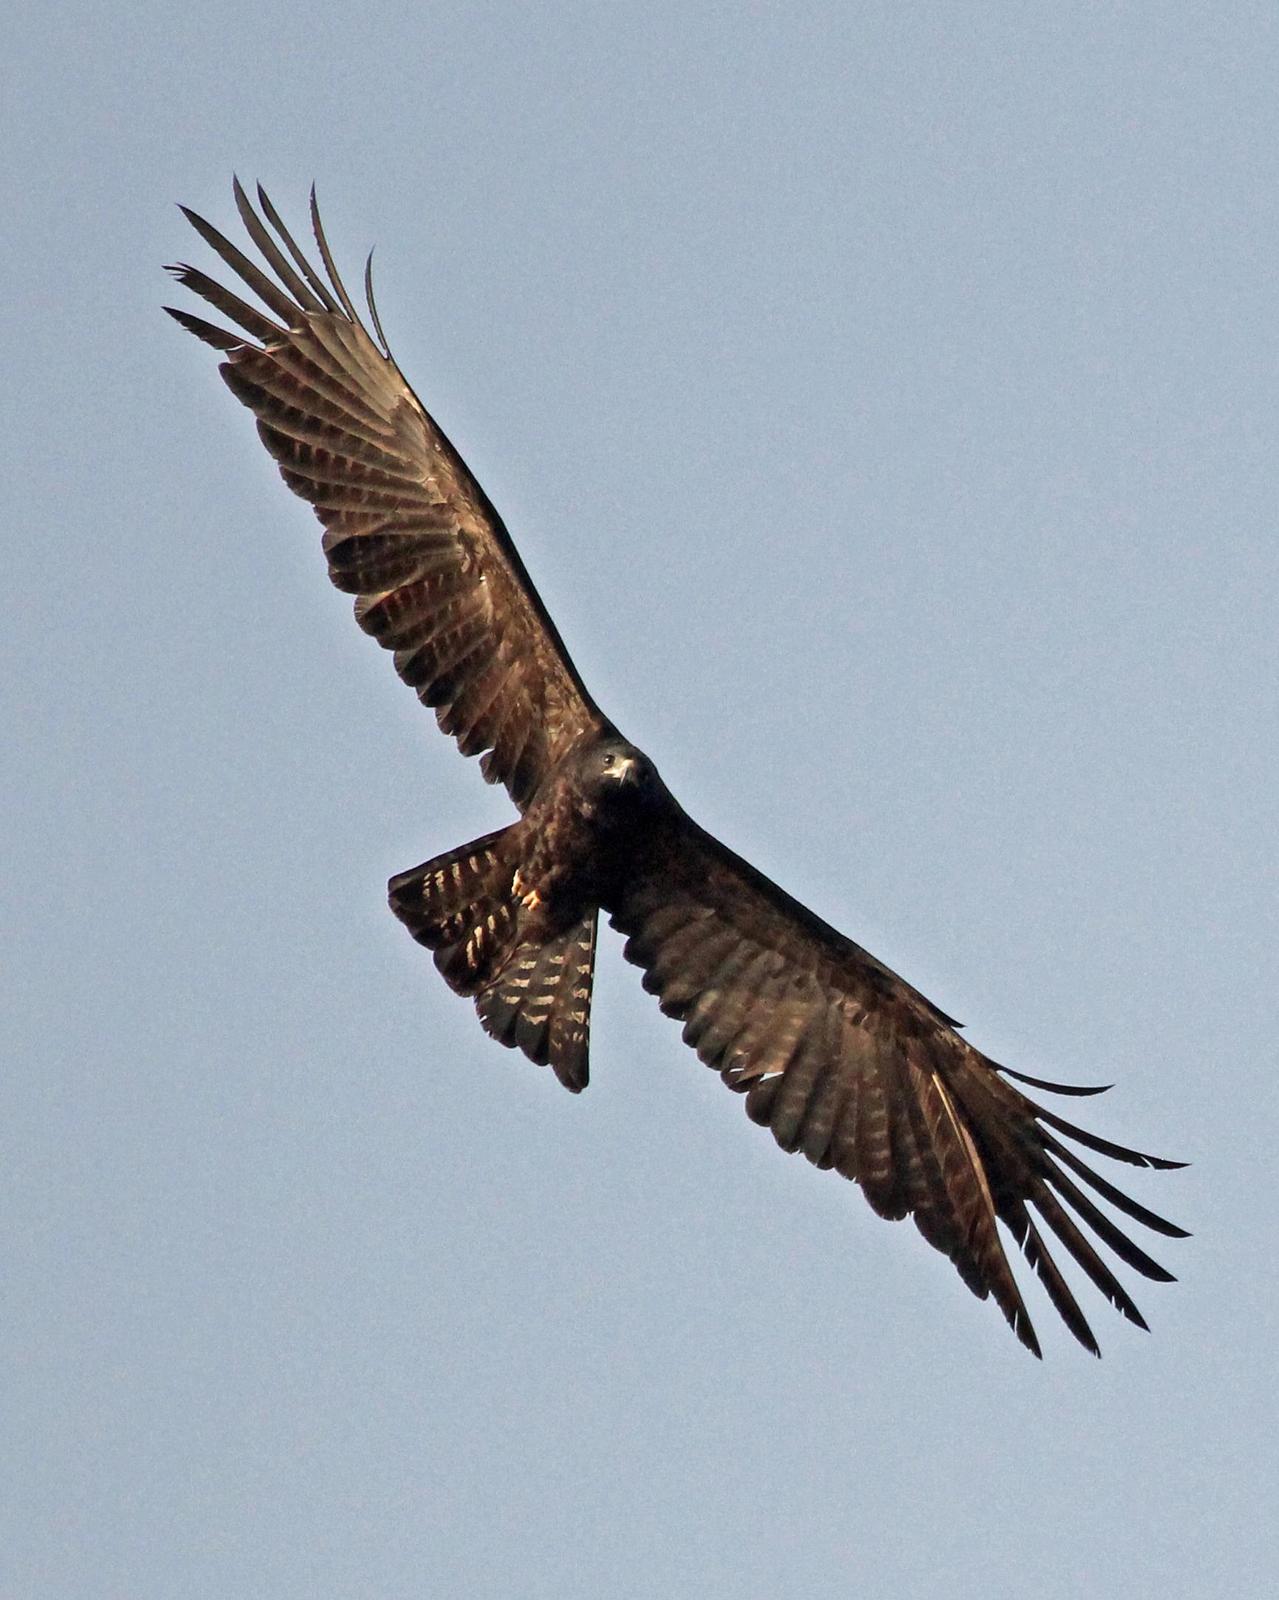 Black Eagle Photo by Robert Polkinghorn